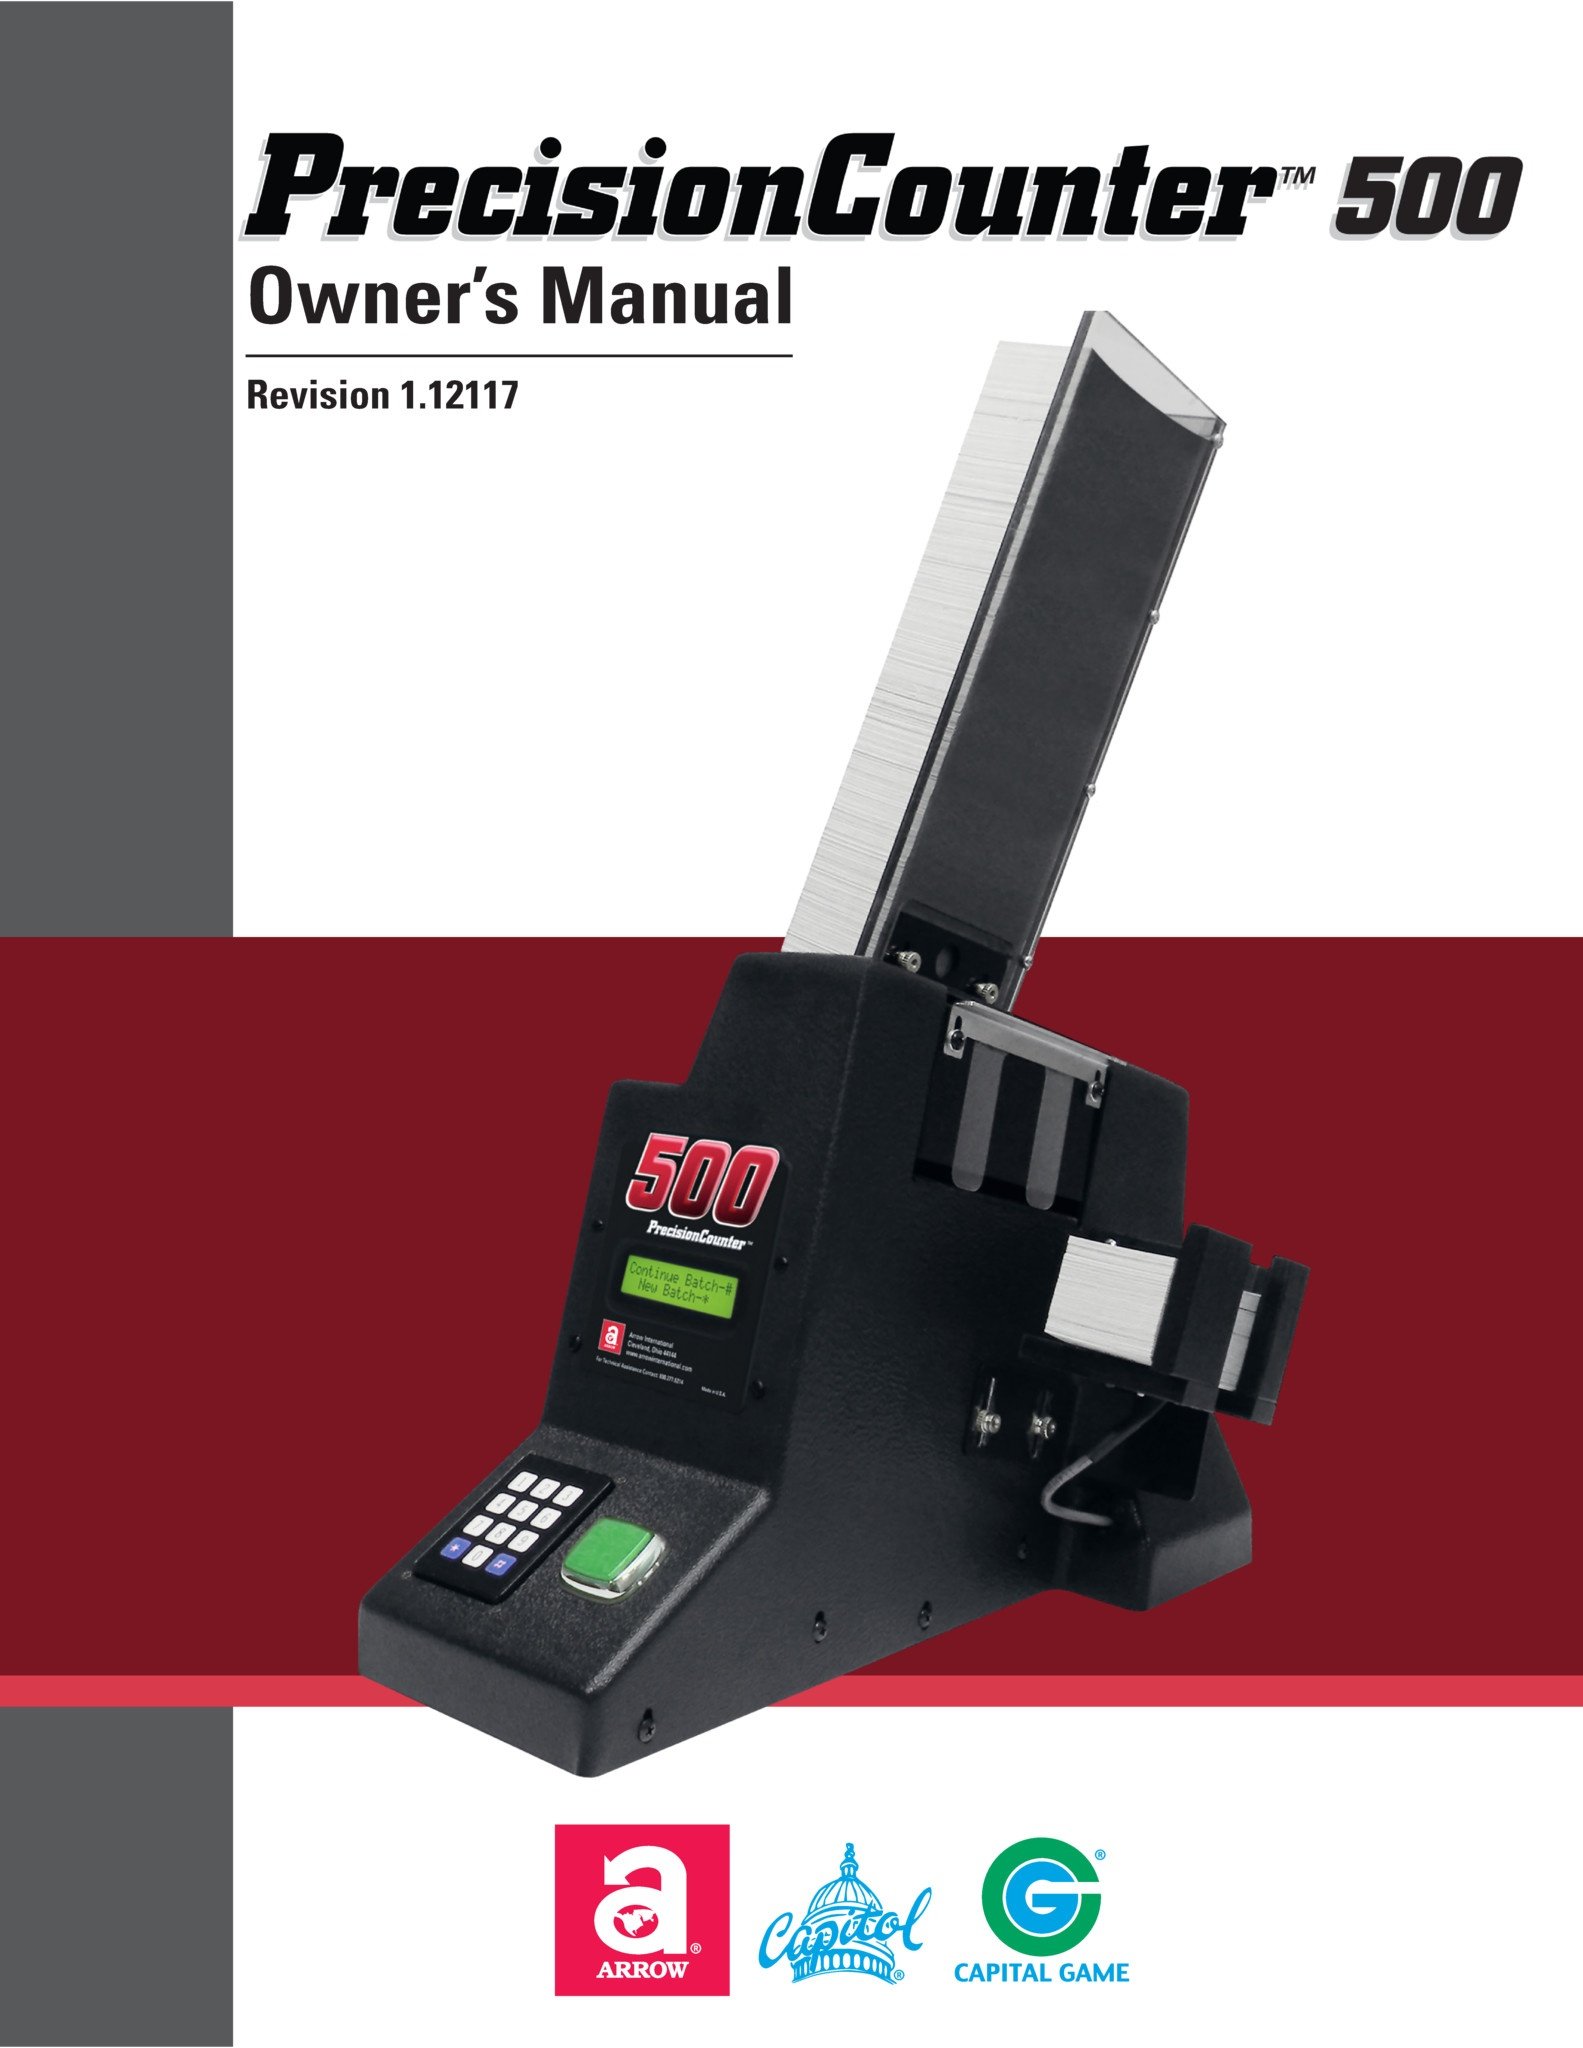 PrecisionCounter500 Manual Equipment Manuals